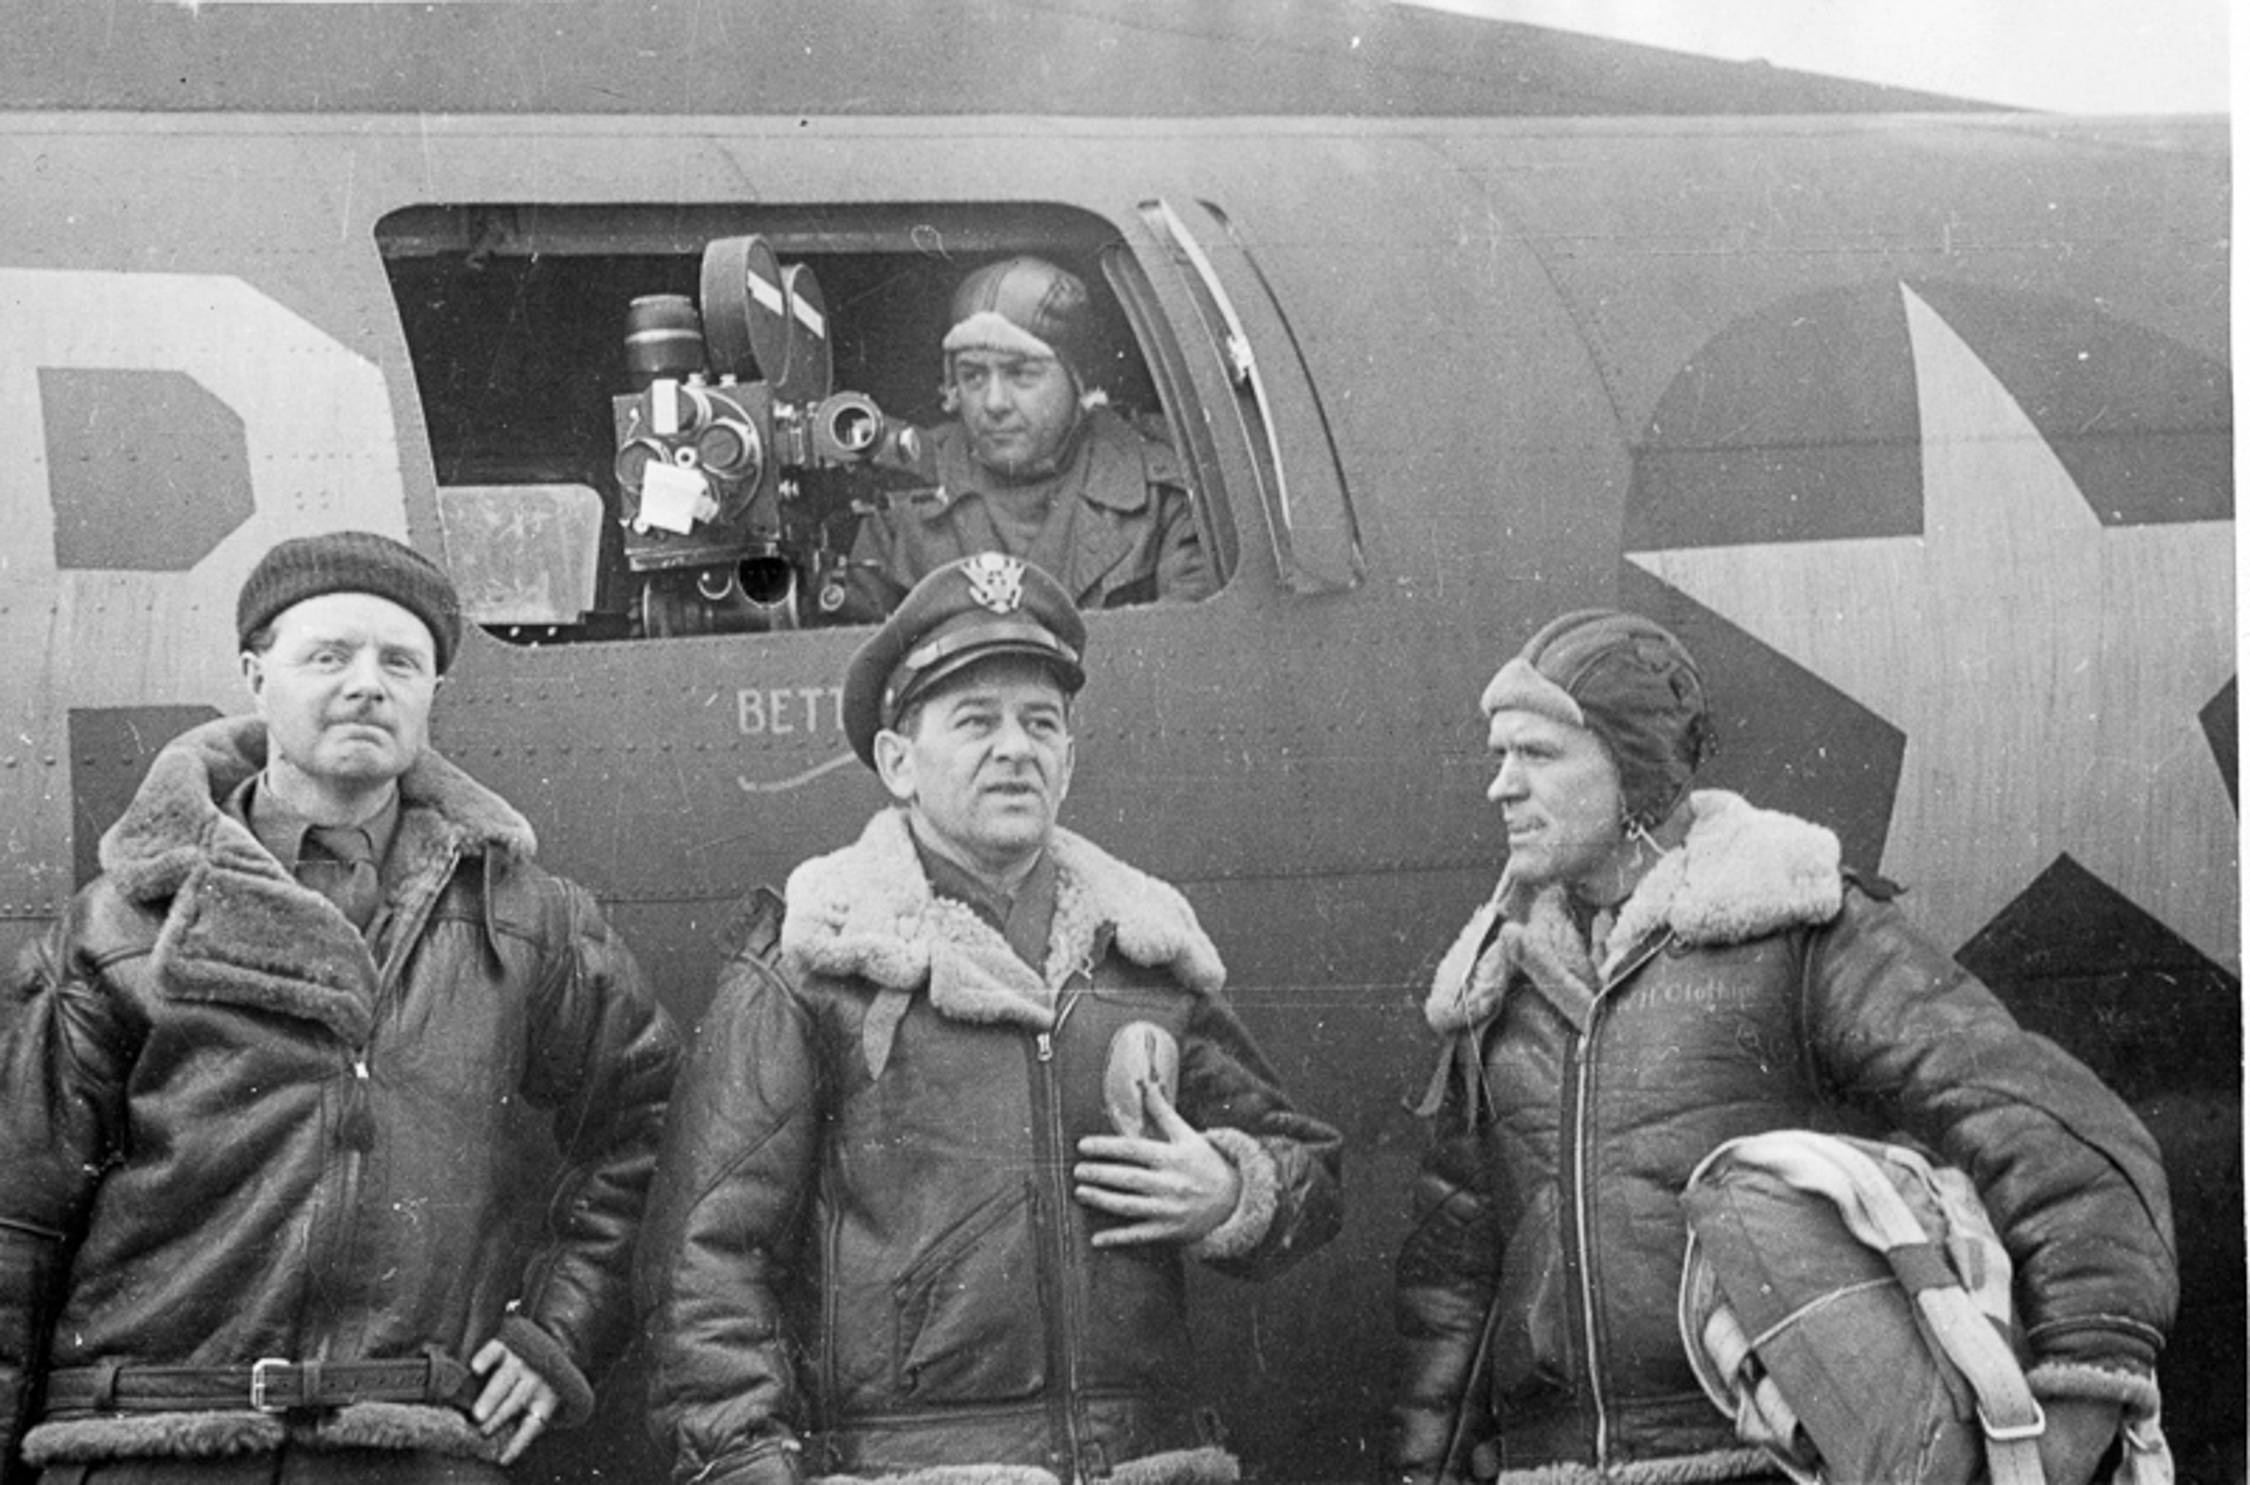 ROBERT MORGAN MEMPHIS BELLE B-17 WWII SIGNED CAP MOVIE COL 